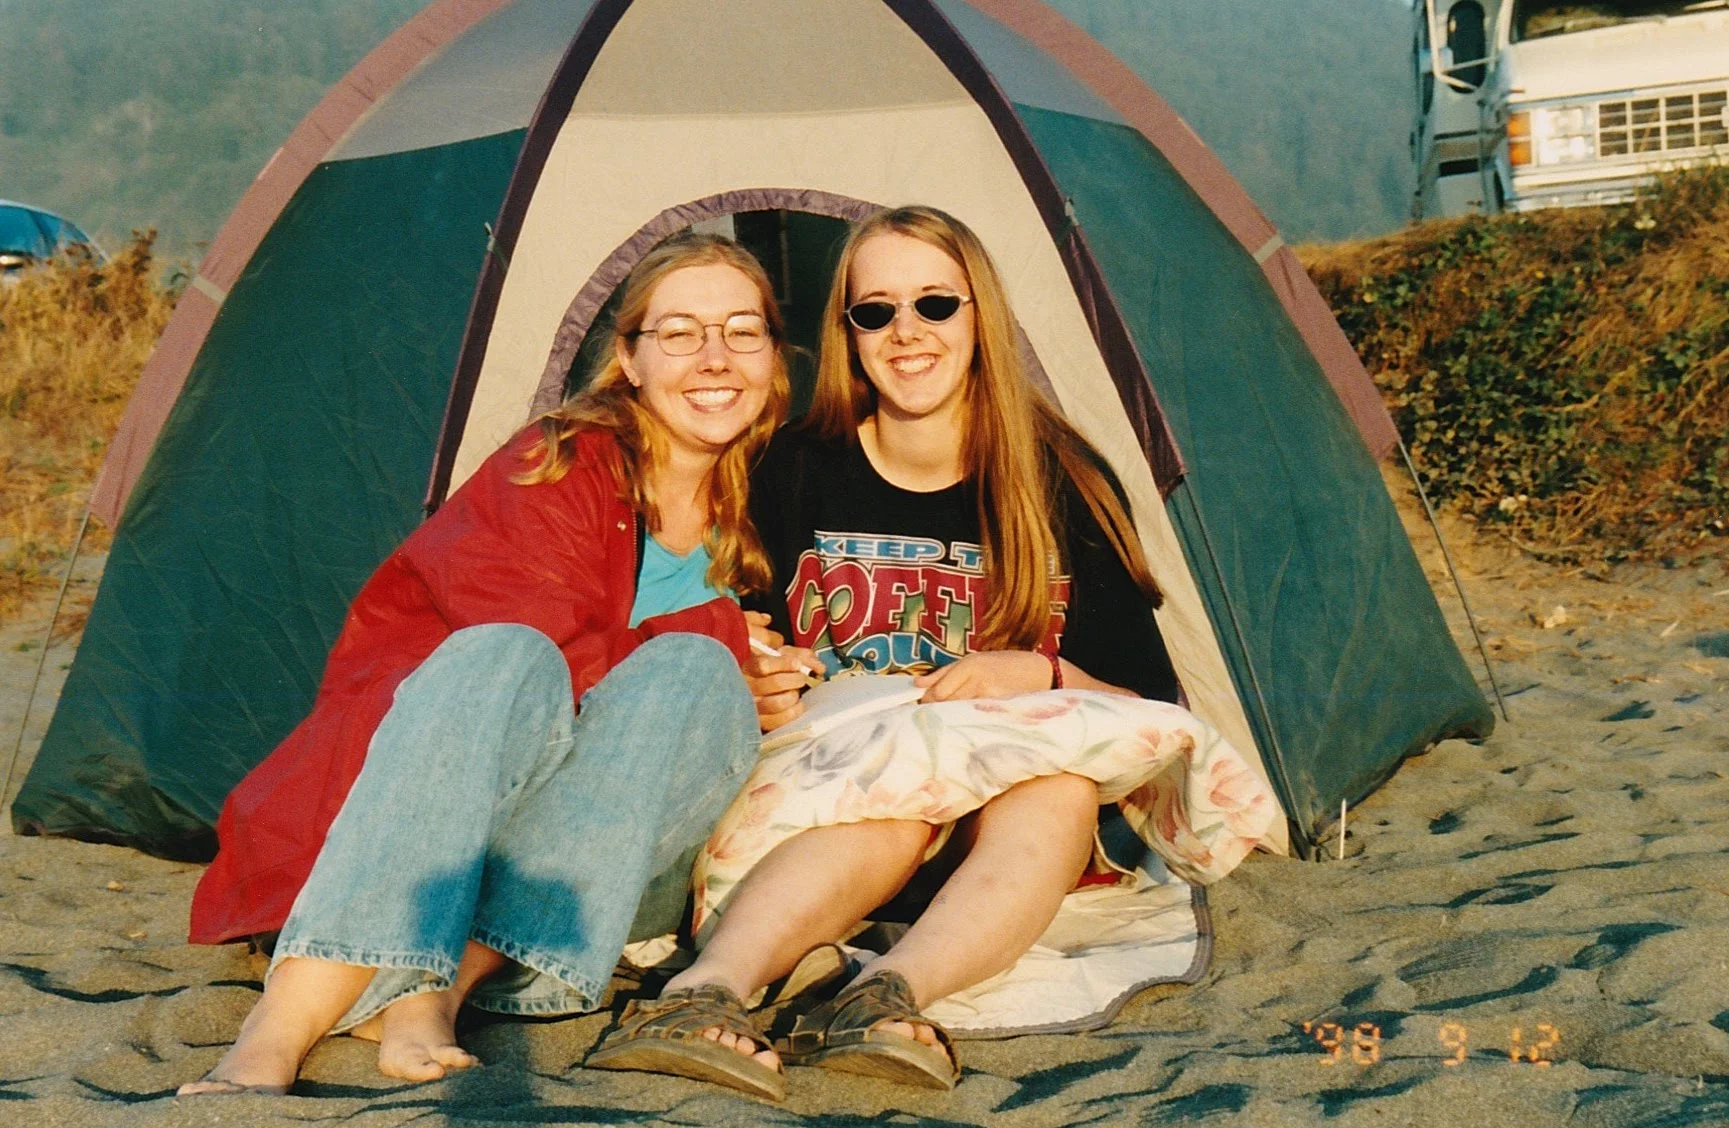 Best friend in a tent on a beach